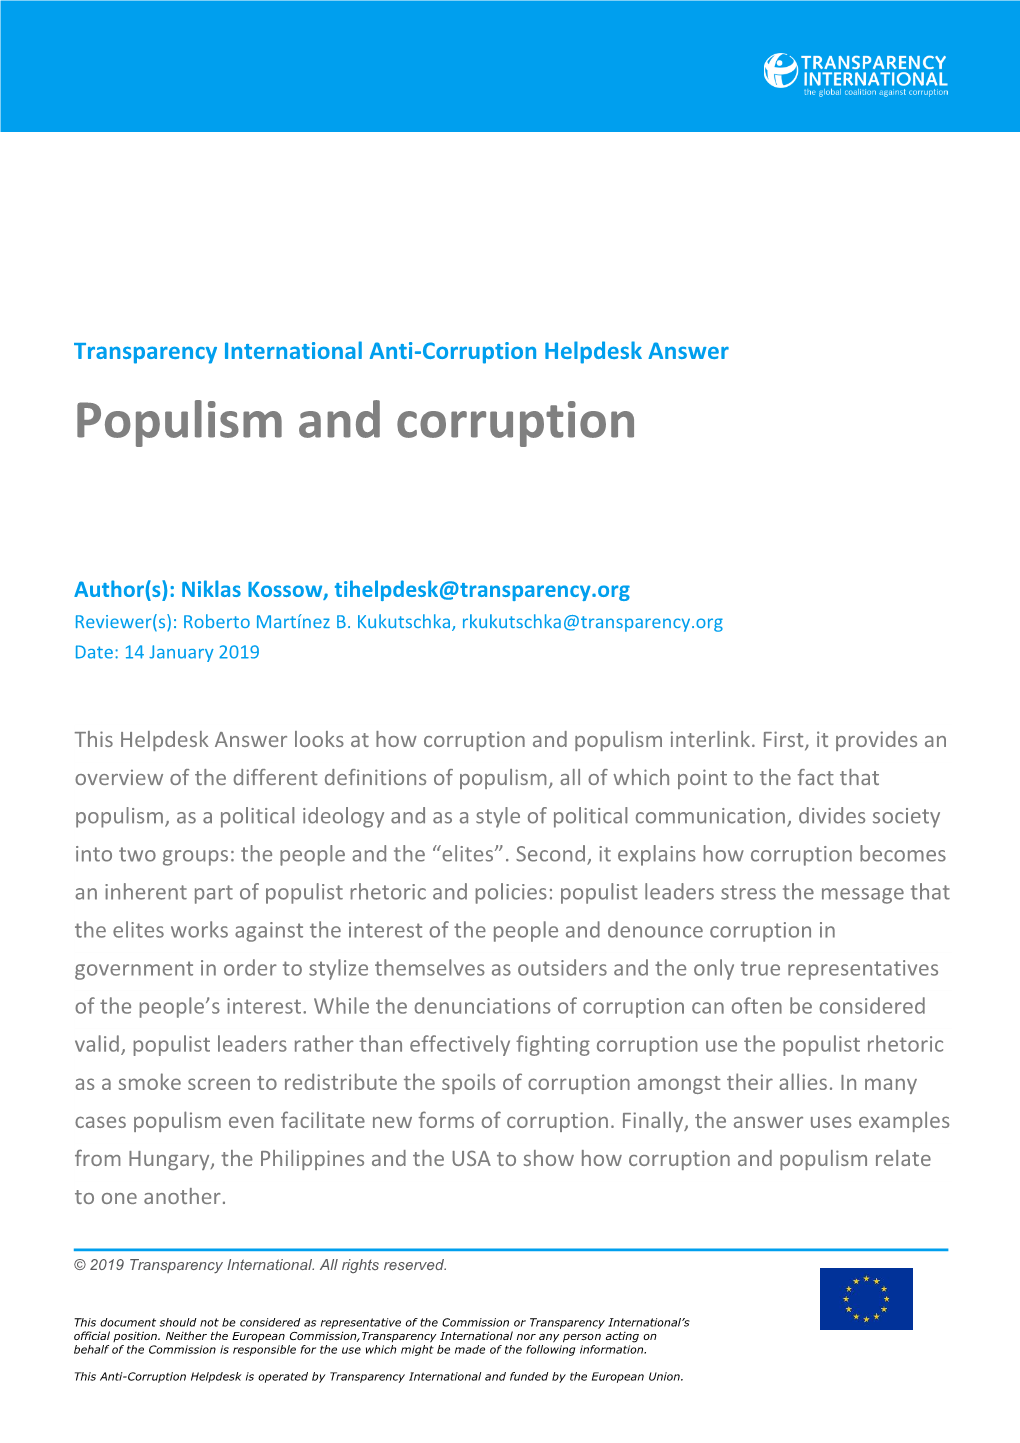 Populism and Corruption